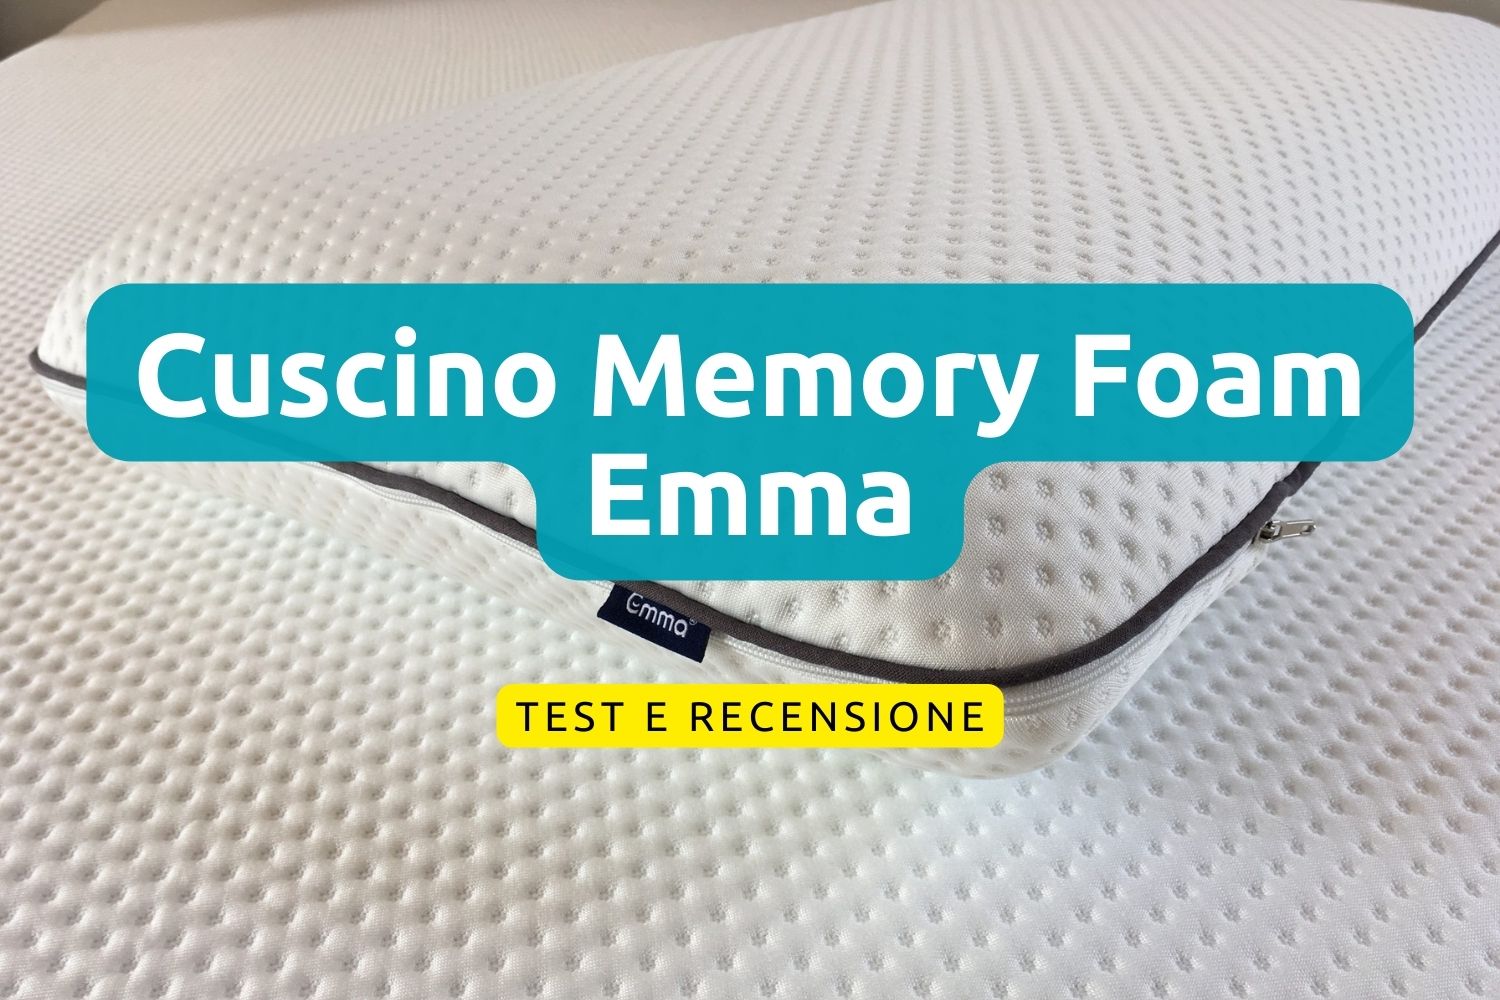 Cuscino Memory Foam Emma, test e recensione